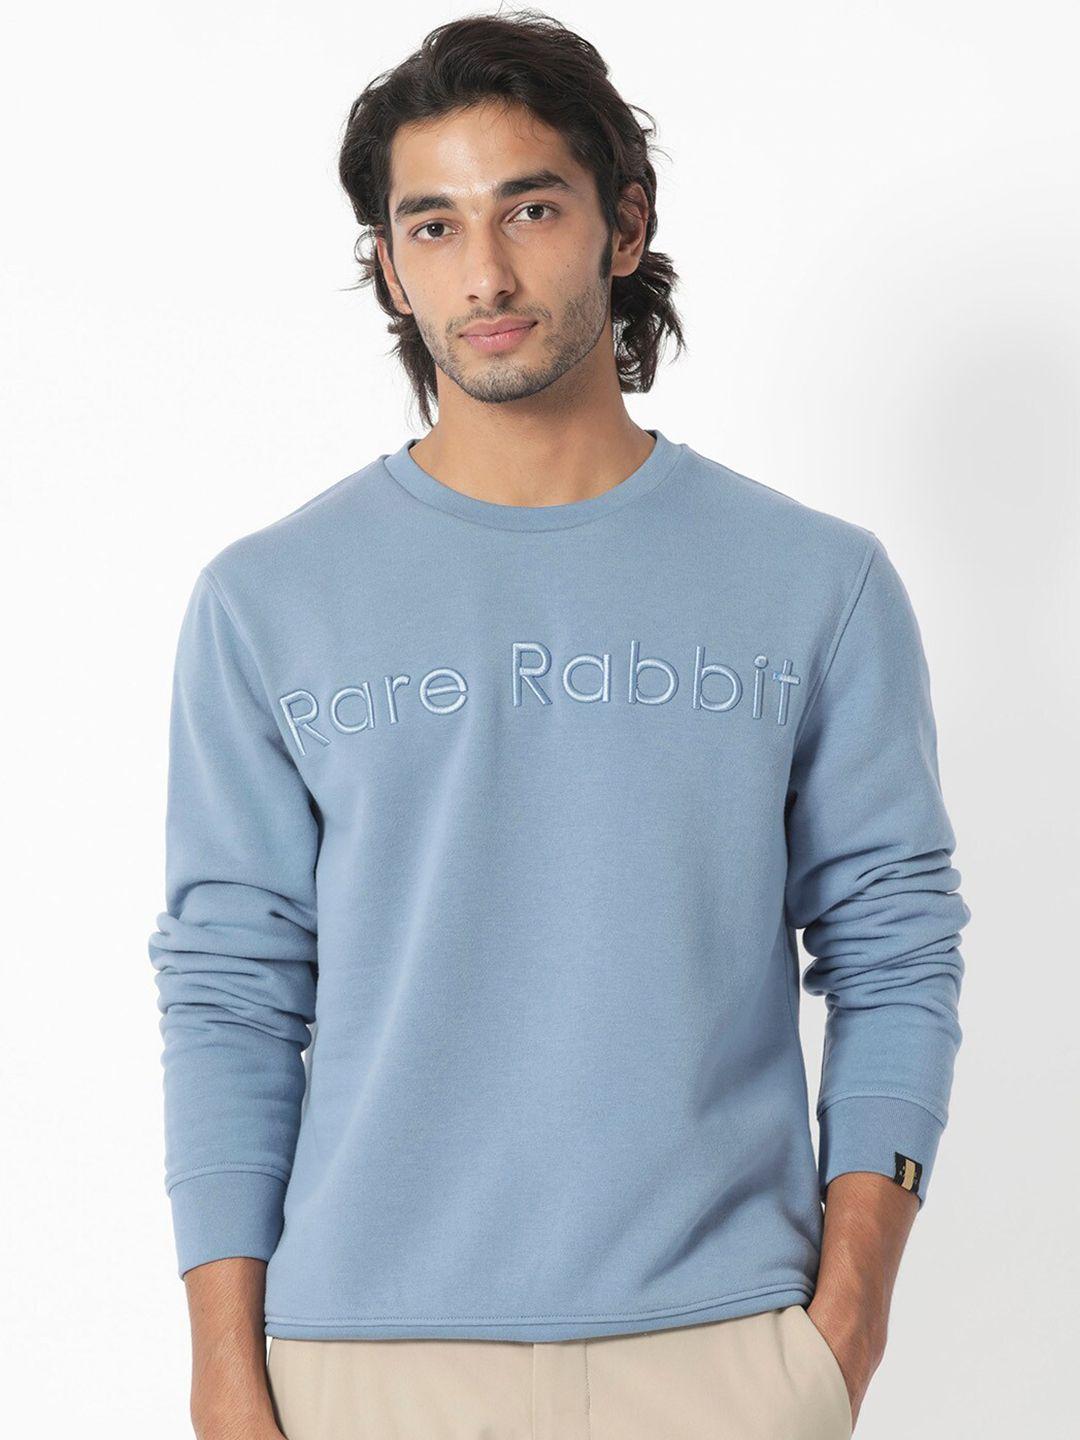 rare rabbit typography printed cotton pullover sweatshirt